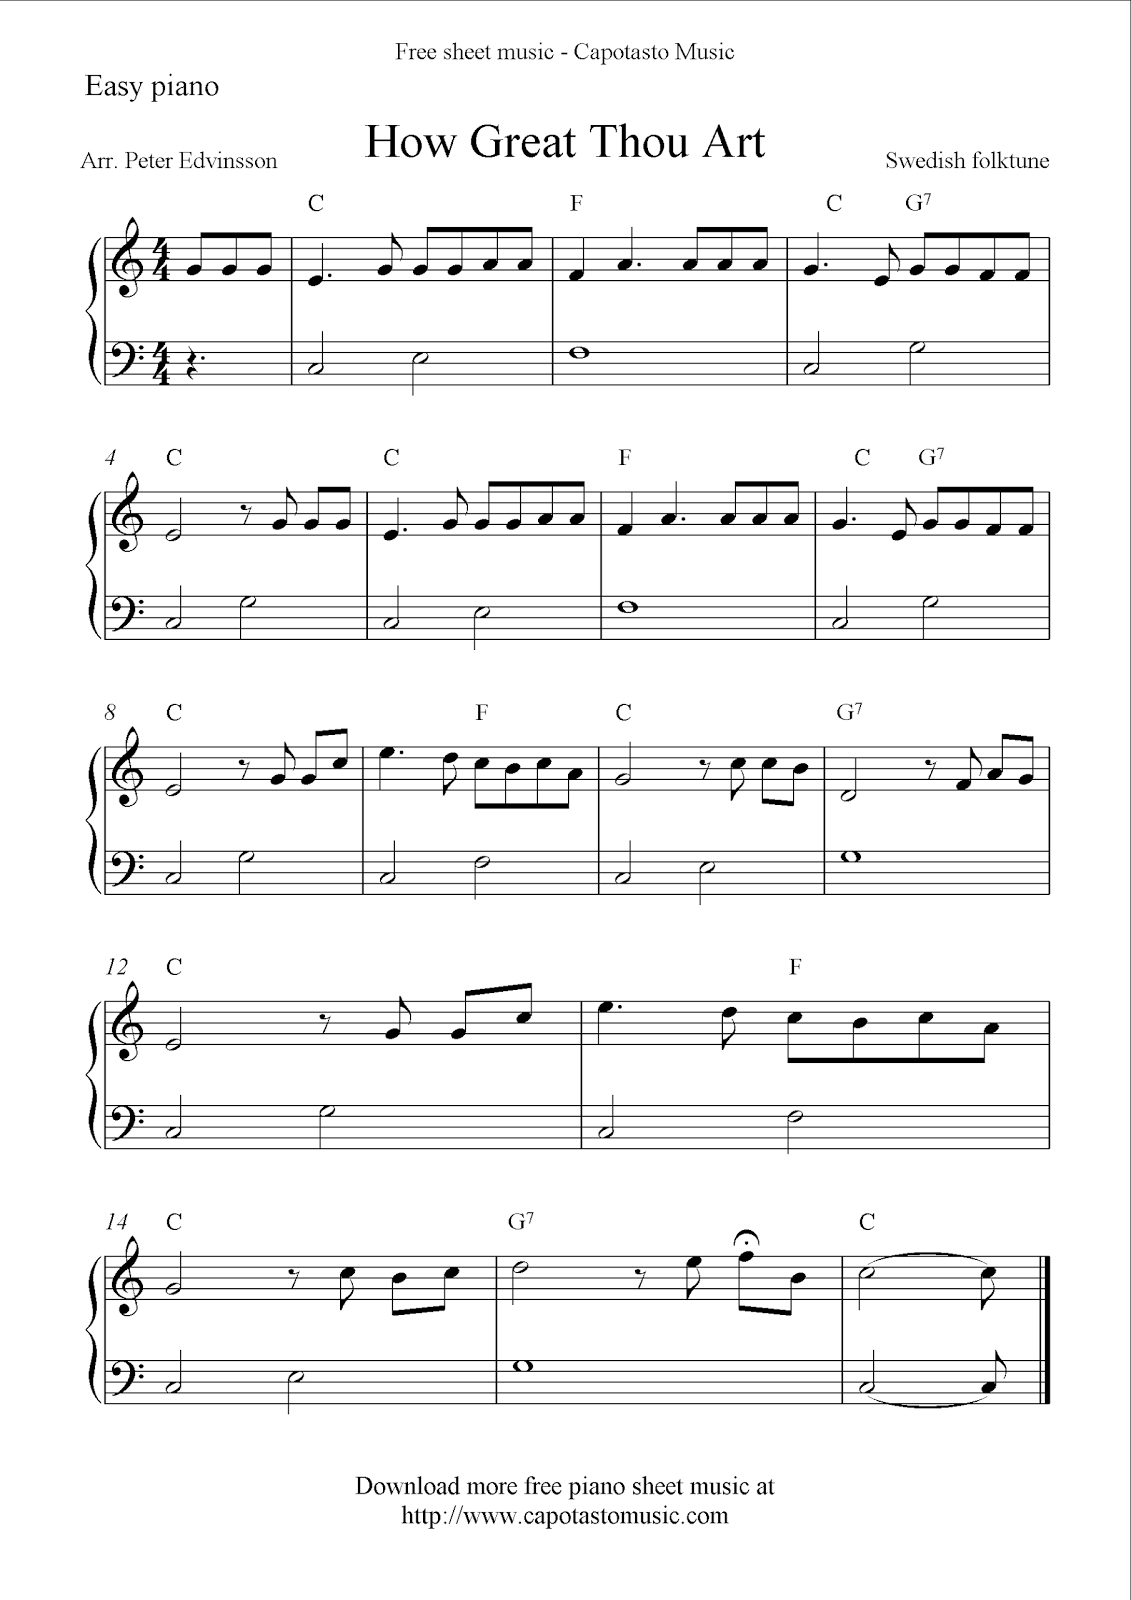 Free Easy Piano Sheet Music, How Great Thou Art - Free Printable Sheet Music For Piano